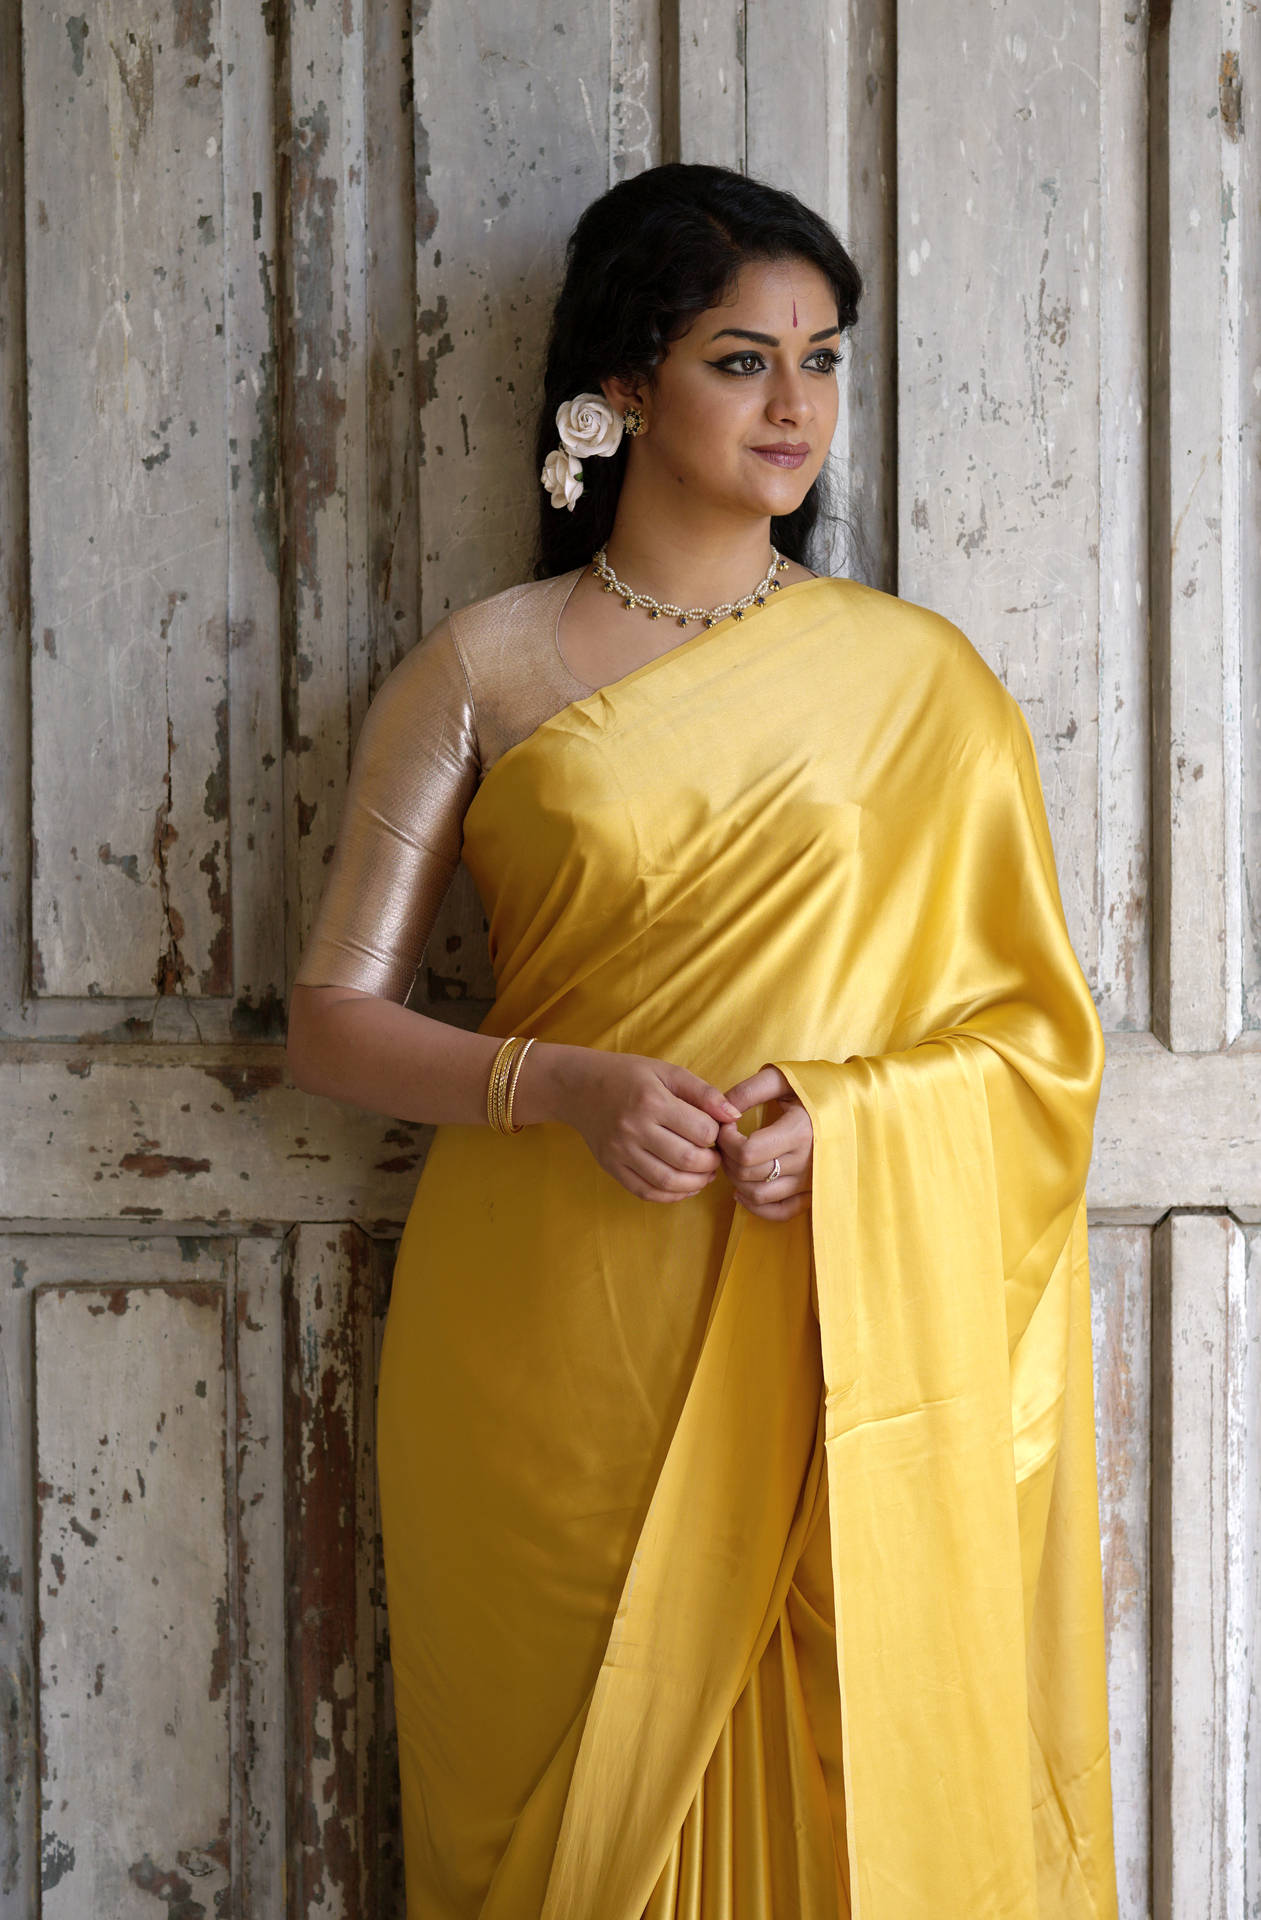 Keerthi Suresh Enchanting in a Golden Yellow Saree Wallpaper